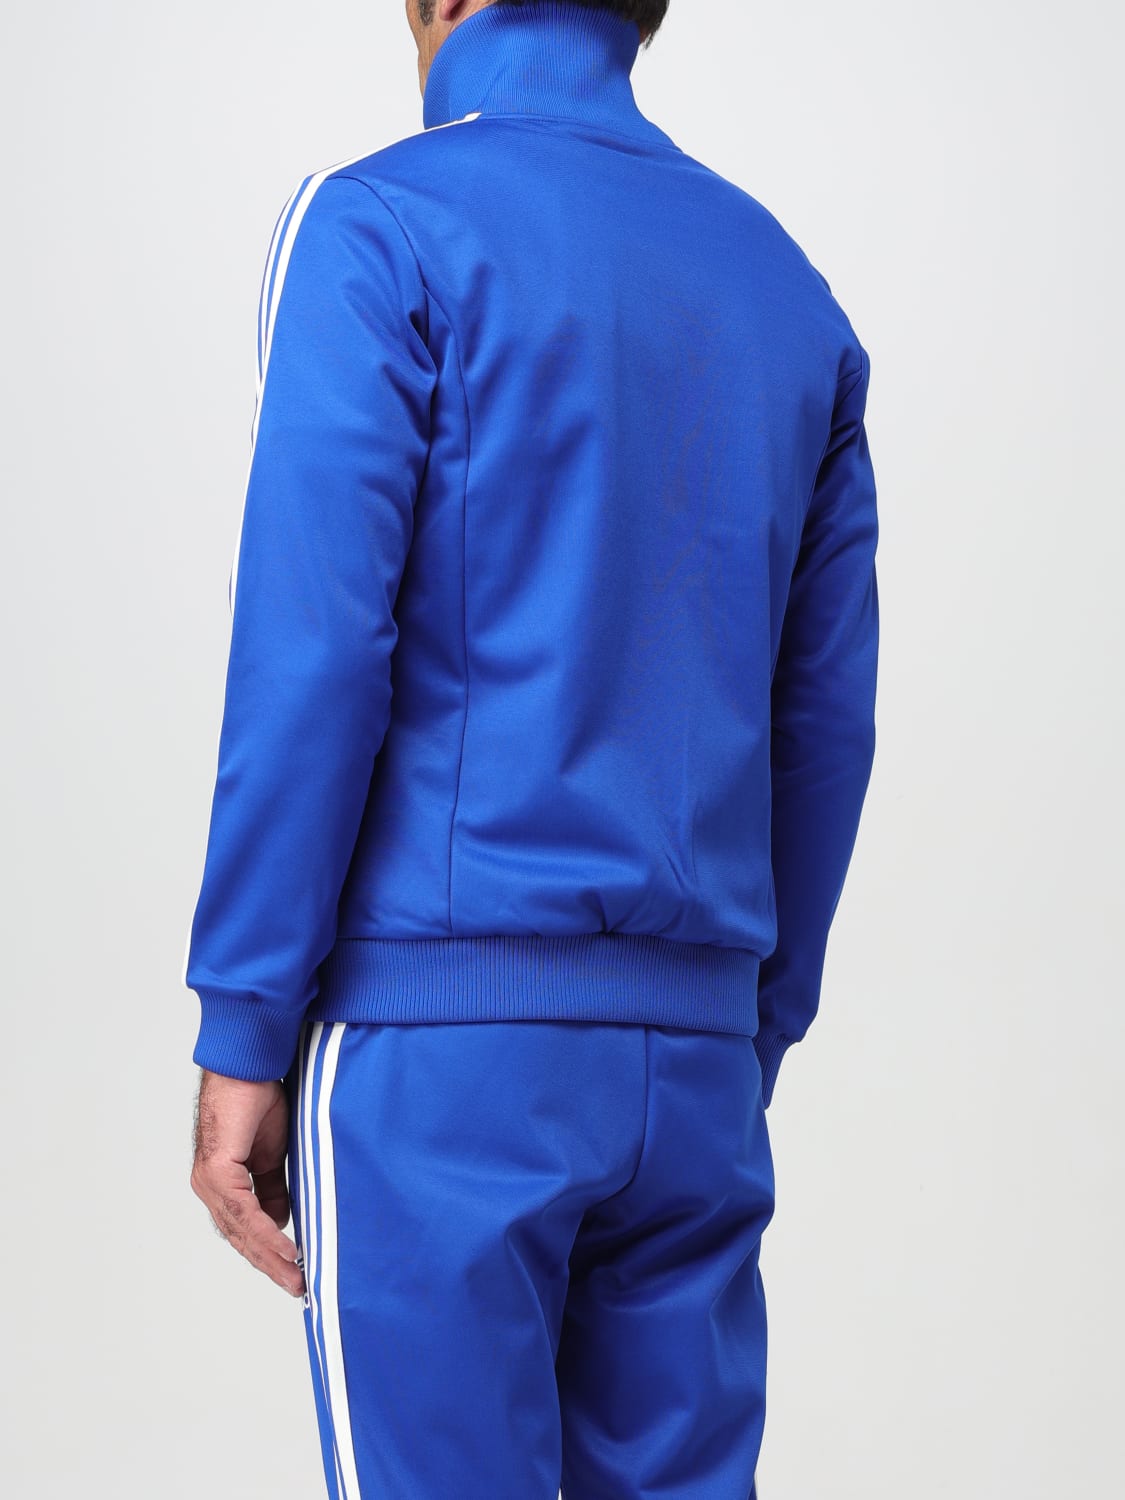 ADIDAS ORIGINALS: sweatshirt for man - Gnawed Blue | Adidas Originals  sweatshirt IU2122 online at